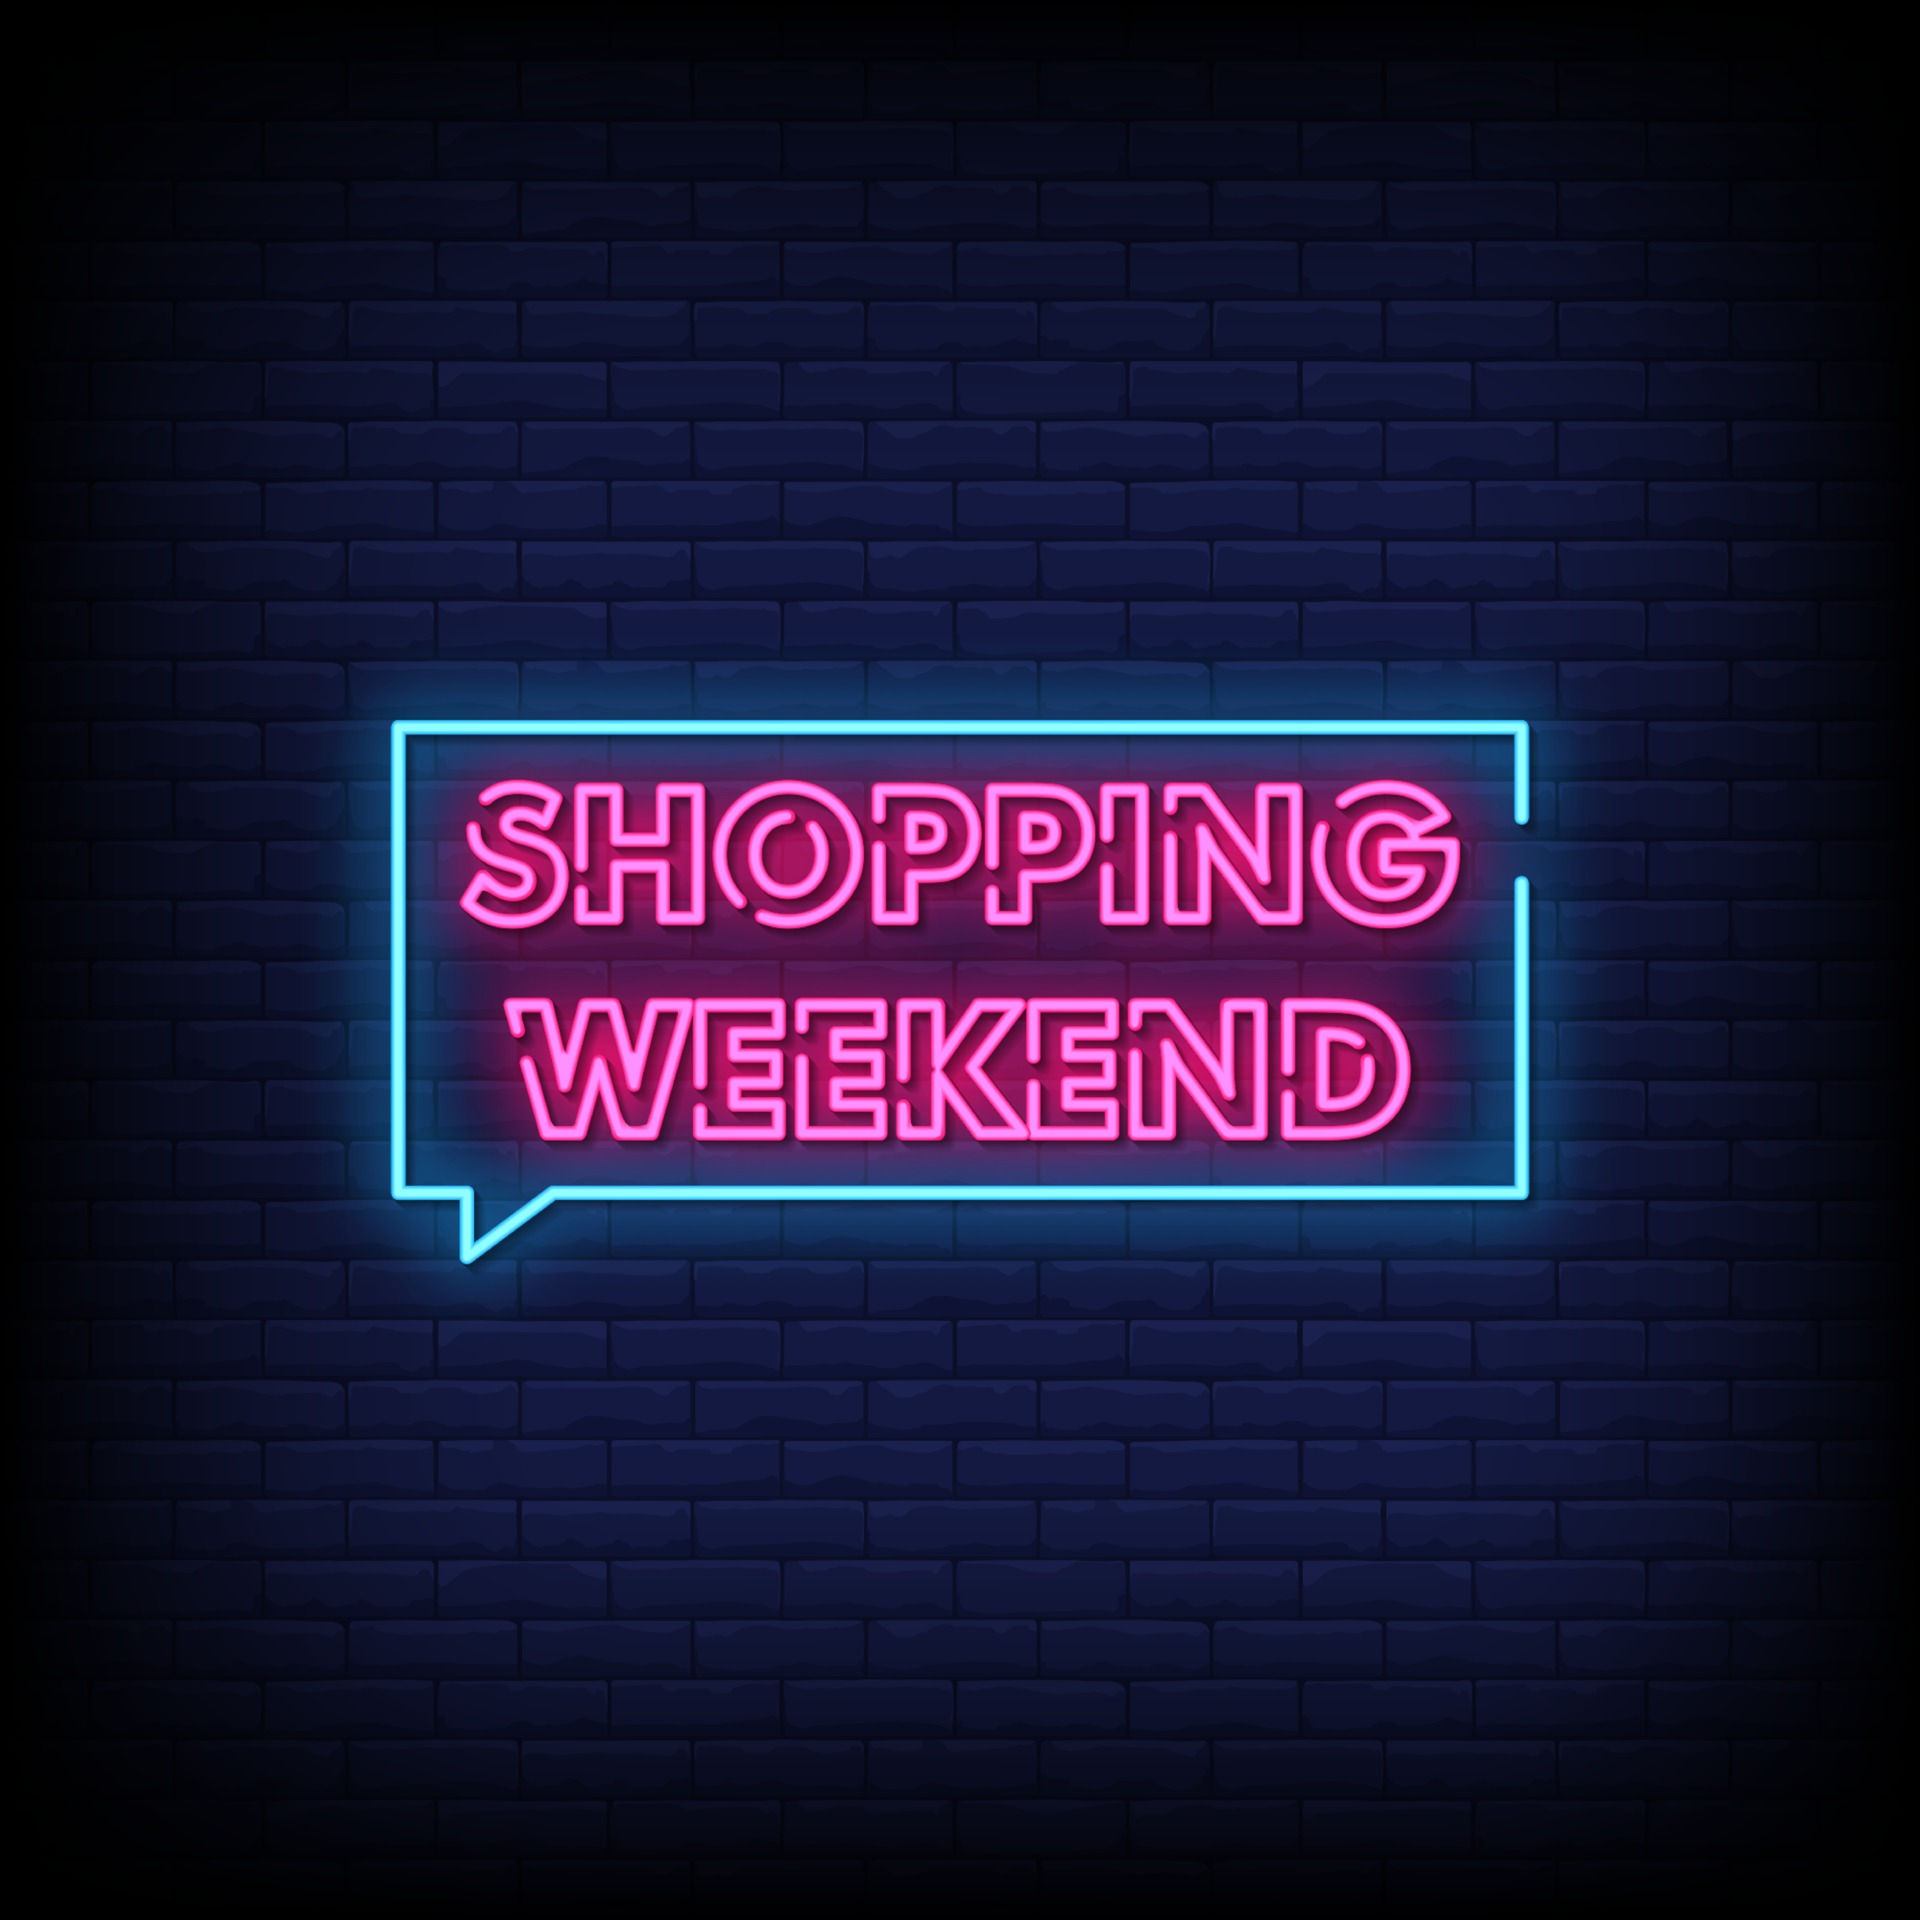 We shopping at the weekend. Shopping weekend. The weekend неон. Карта weekend магазин.